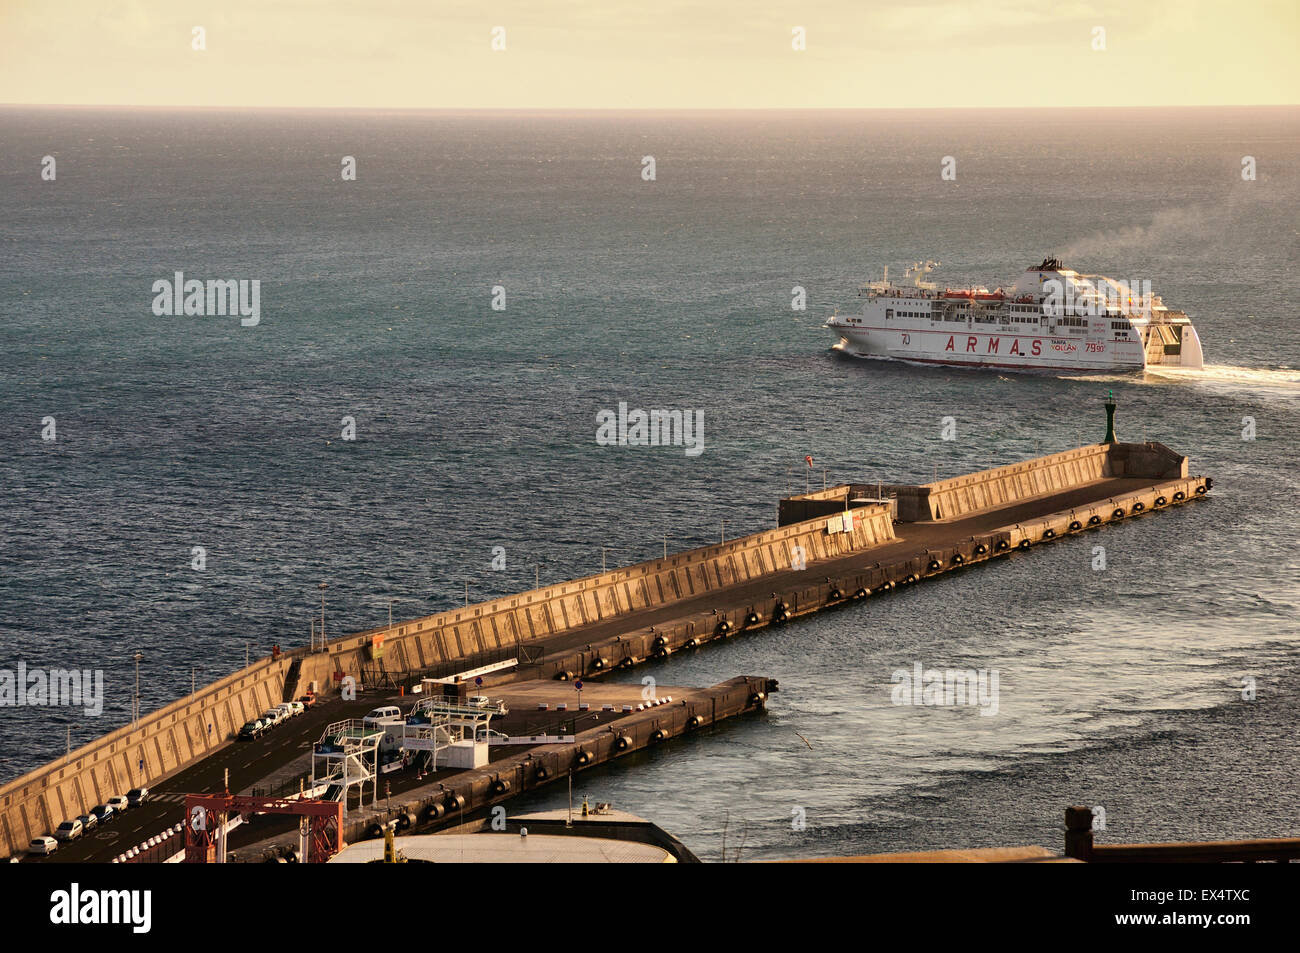 Harbour of San Sebastian de la Gomera, Canary Islands, Spain Stock Photo